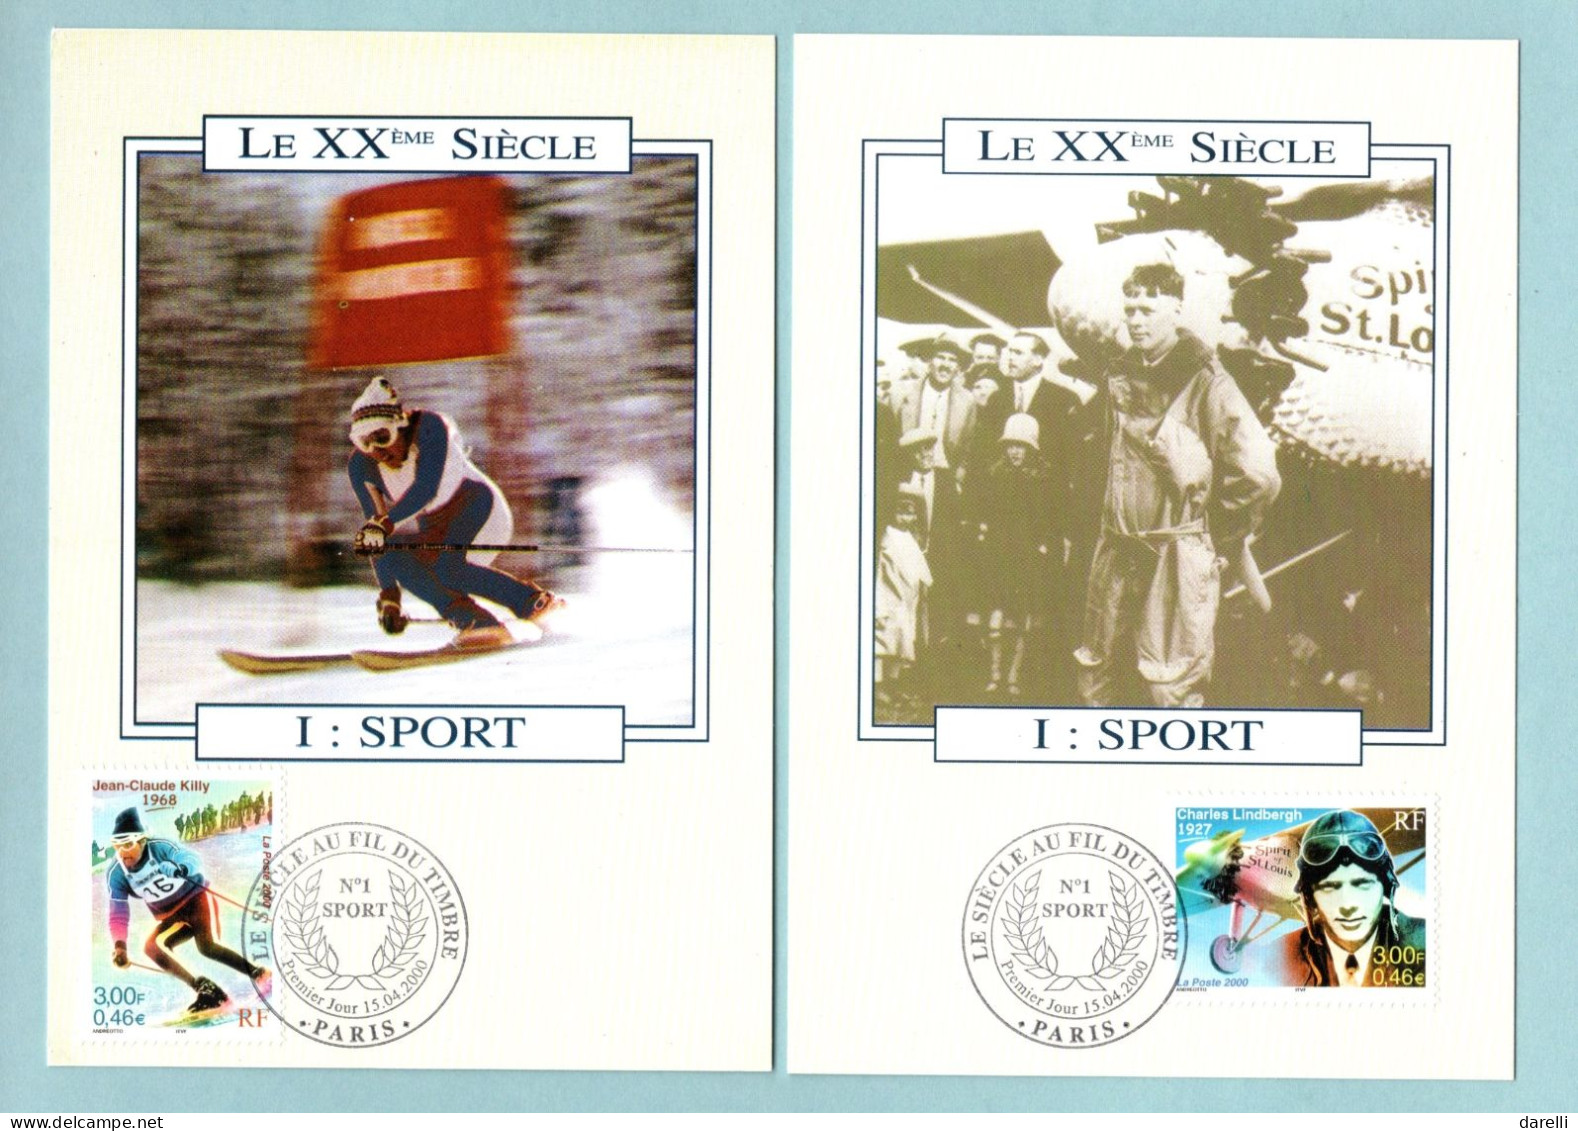 Carte Maximum 2000 - Le Timbre Au Fil Du Siècle - Sport : Cerdan, Carl Lewis, Football 98, Lindbergh, Kelly - YT 3312/16 - 2000-2009